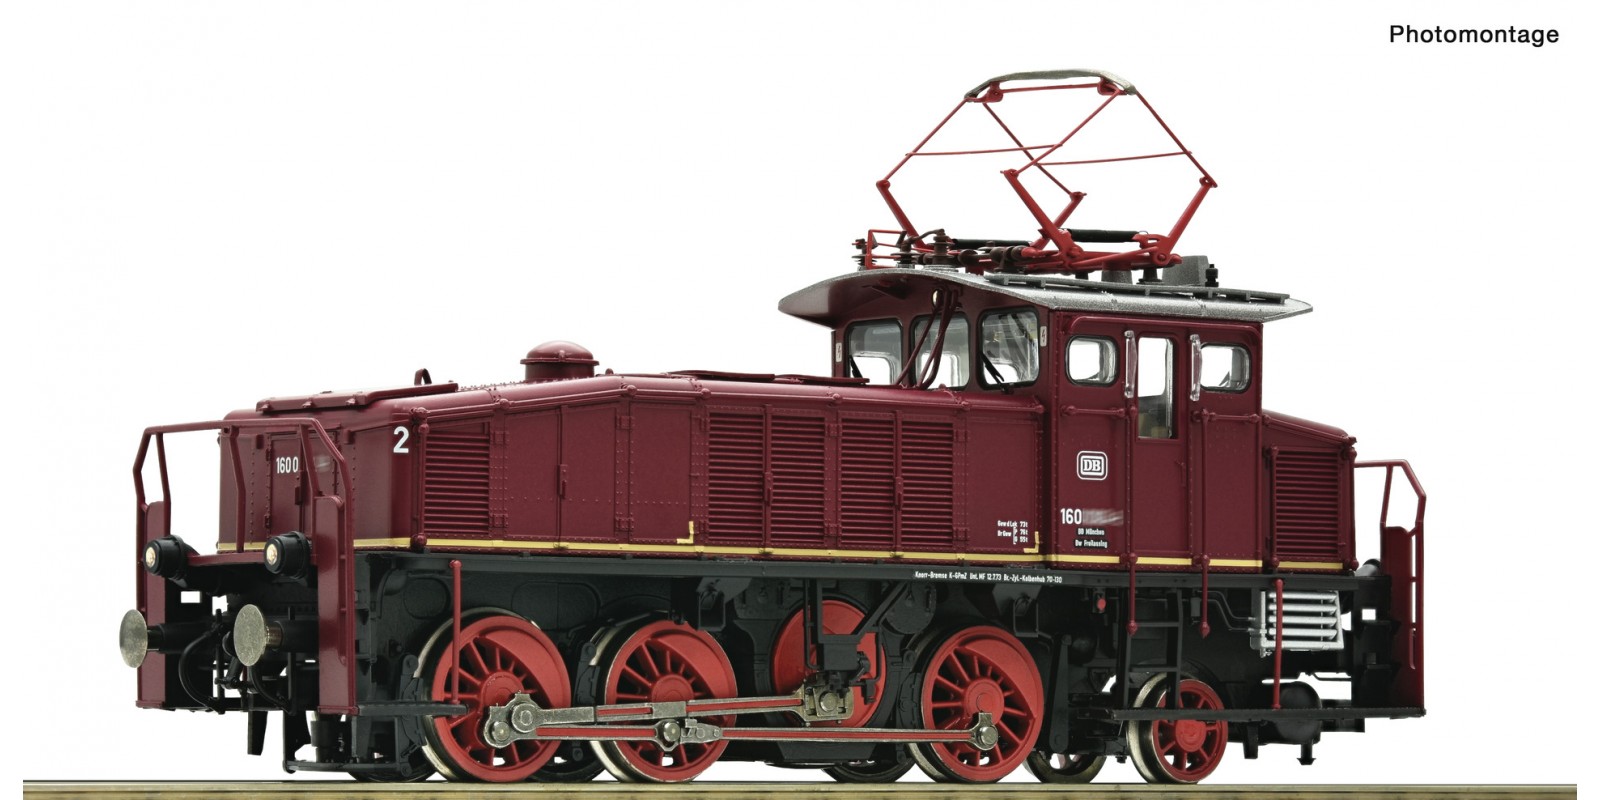 RO78061 Electric locomotive class 160